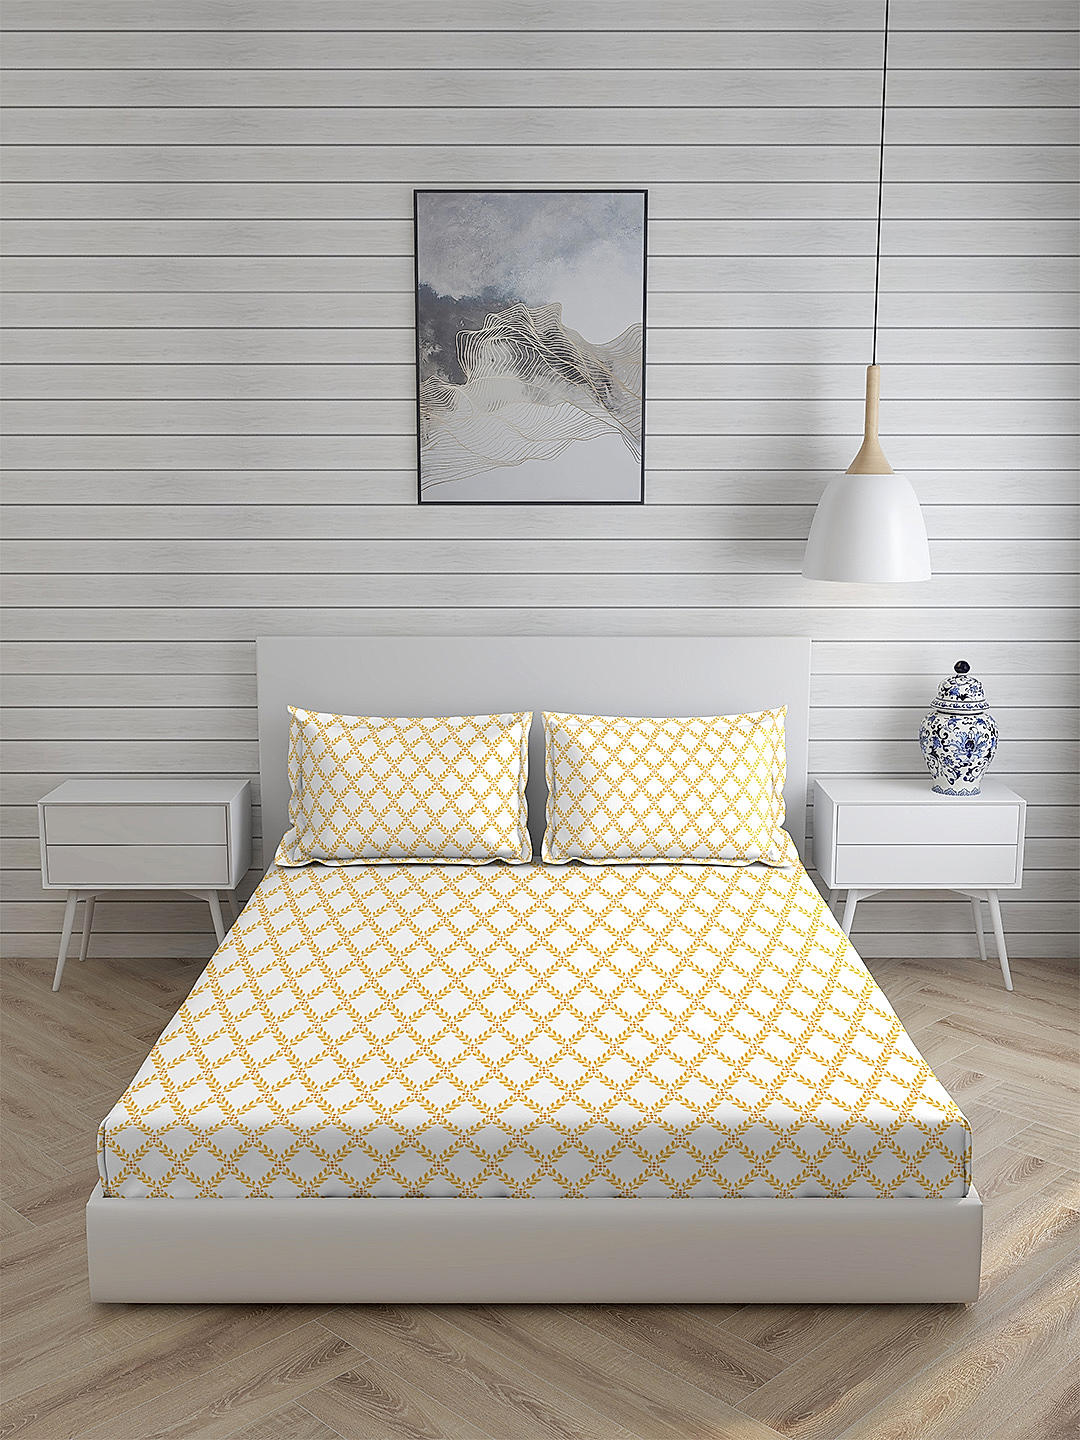 Iris Gaze-1 100% cotton Fine White/Yellow Colored Ethnic Print King Bed Sheet Set